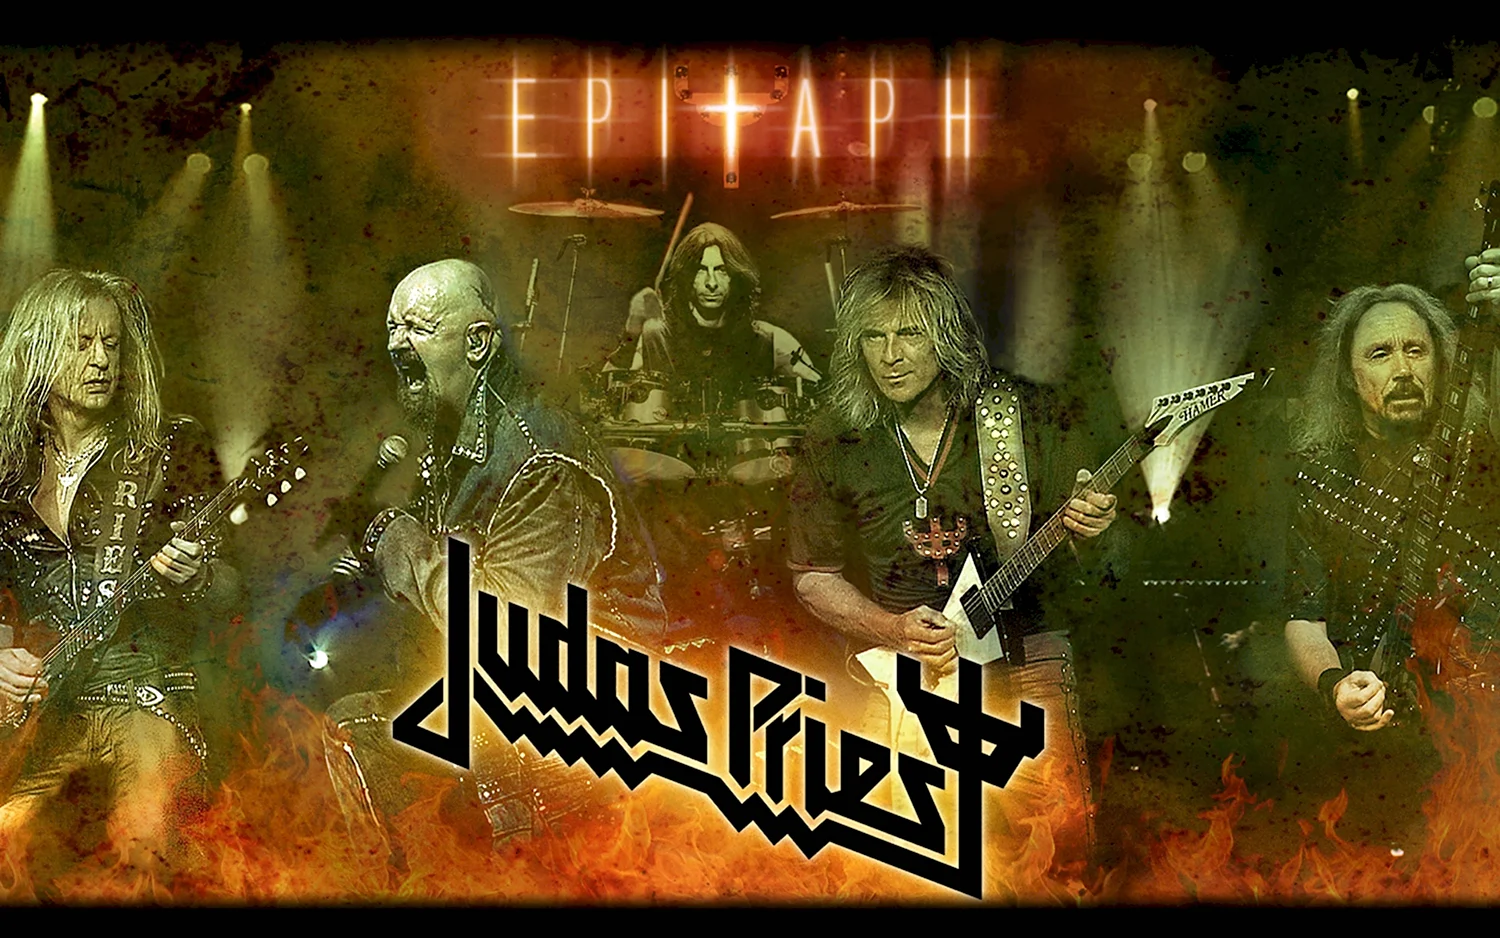 Rock группа Judas Priest